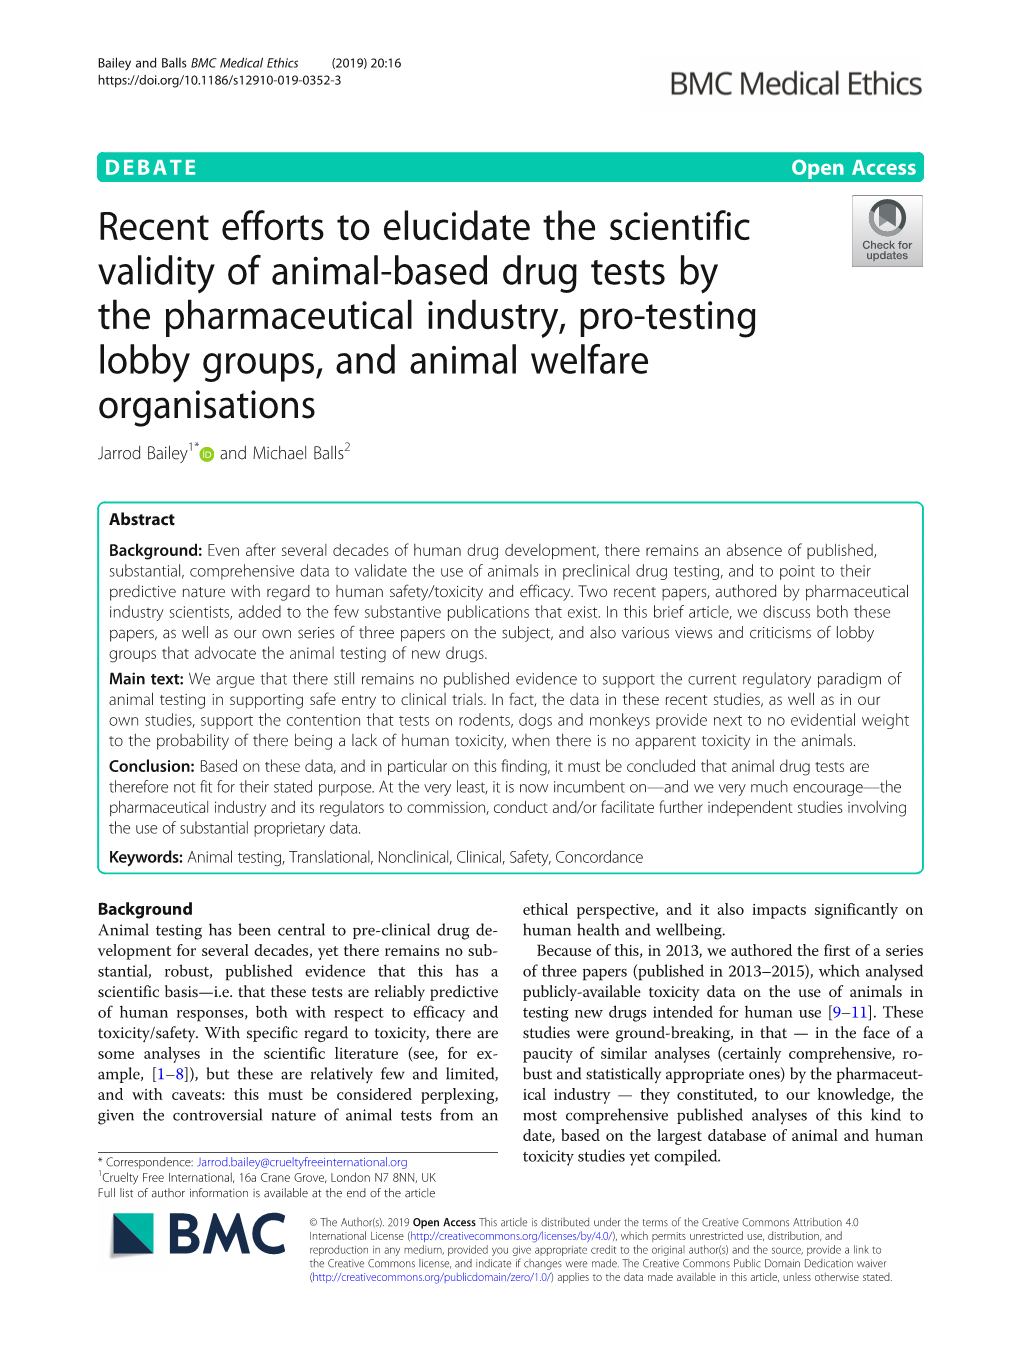 Recent Efforts to Elucidate the Scientific Validity of Animal-Based